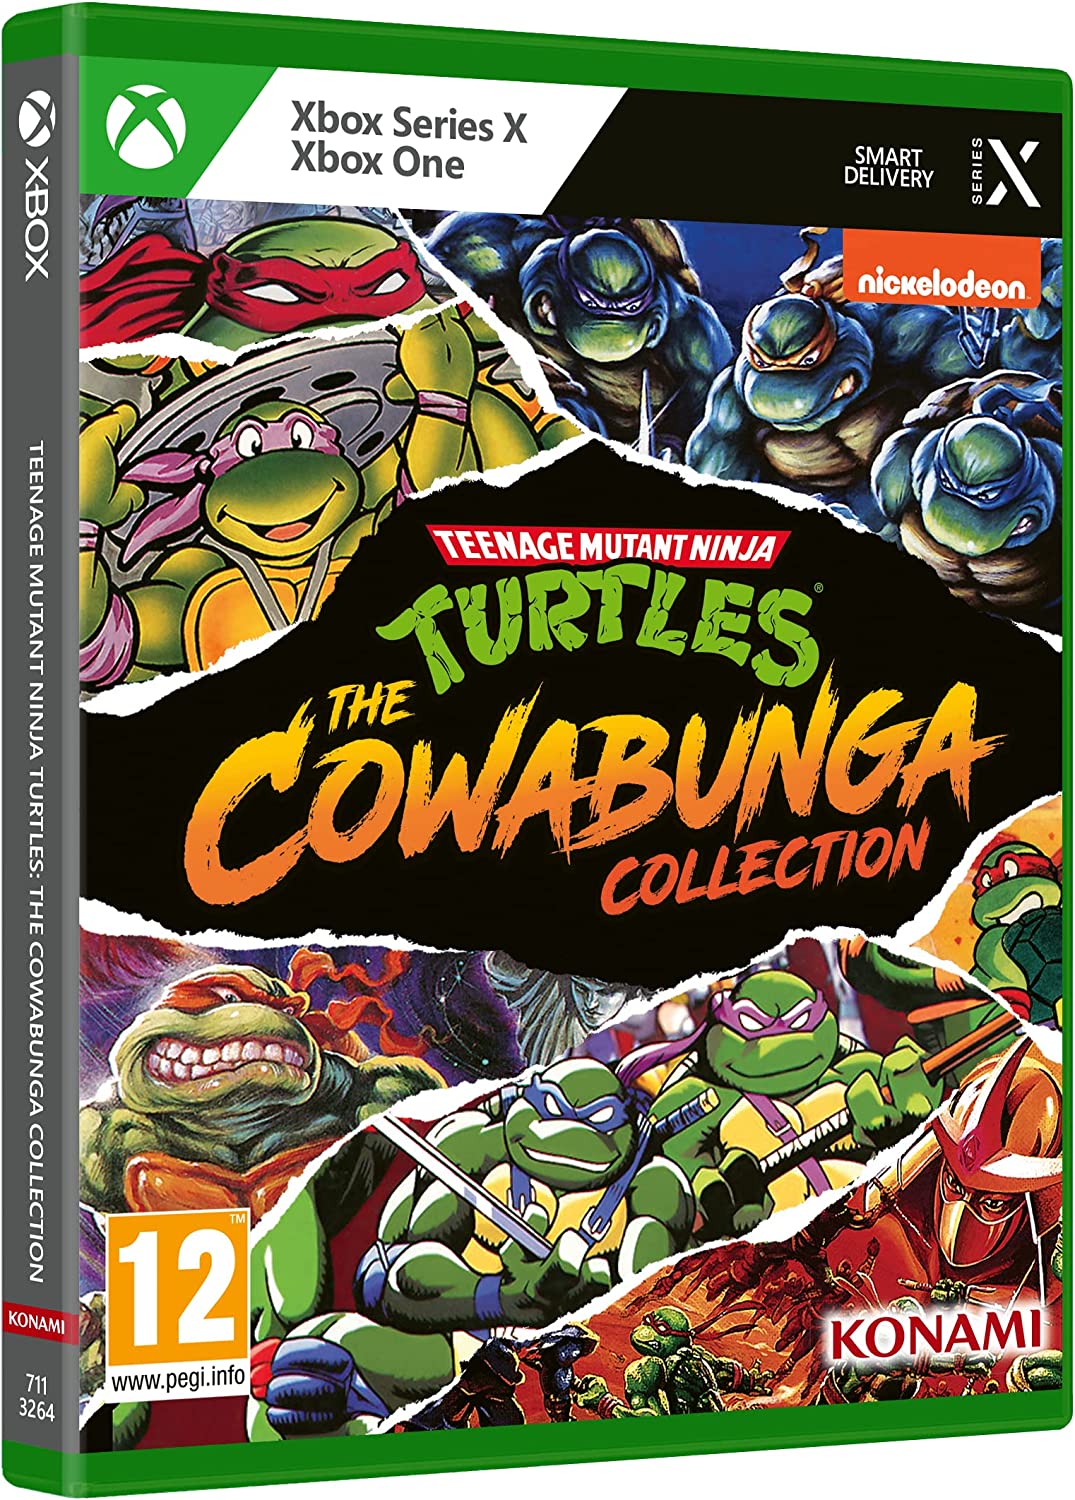 Xbox Collection Ninja Download) Turtles: Key The Cowabunga CD Mutant X|S (Digital Series for Teenage